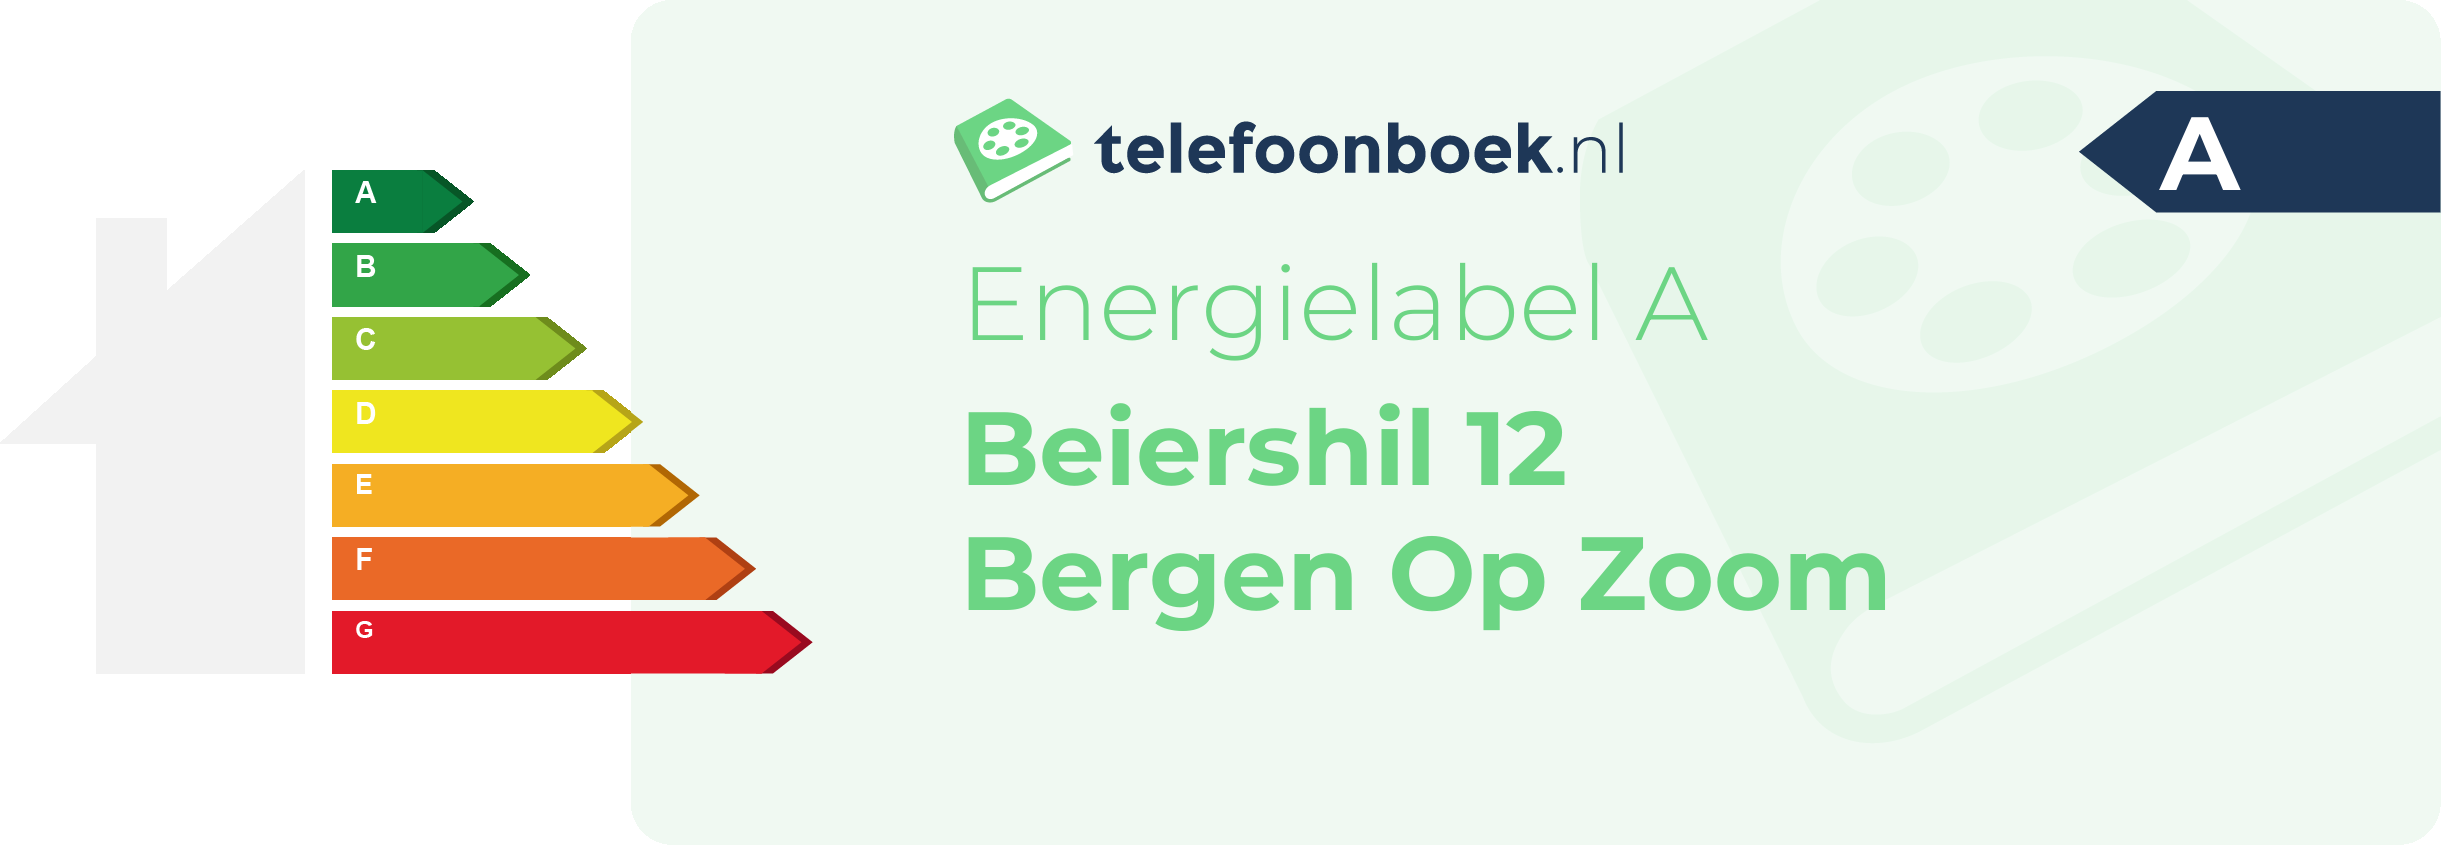 Energielabel Beiershil 12 Bergen Op Zoom